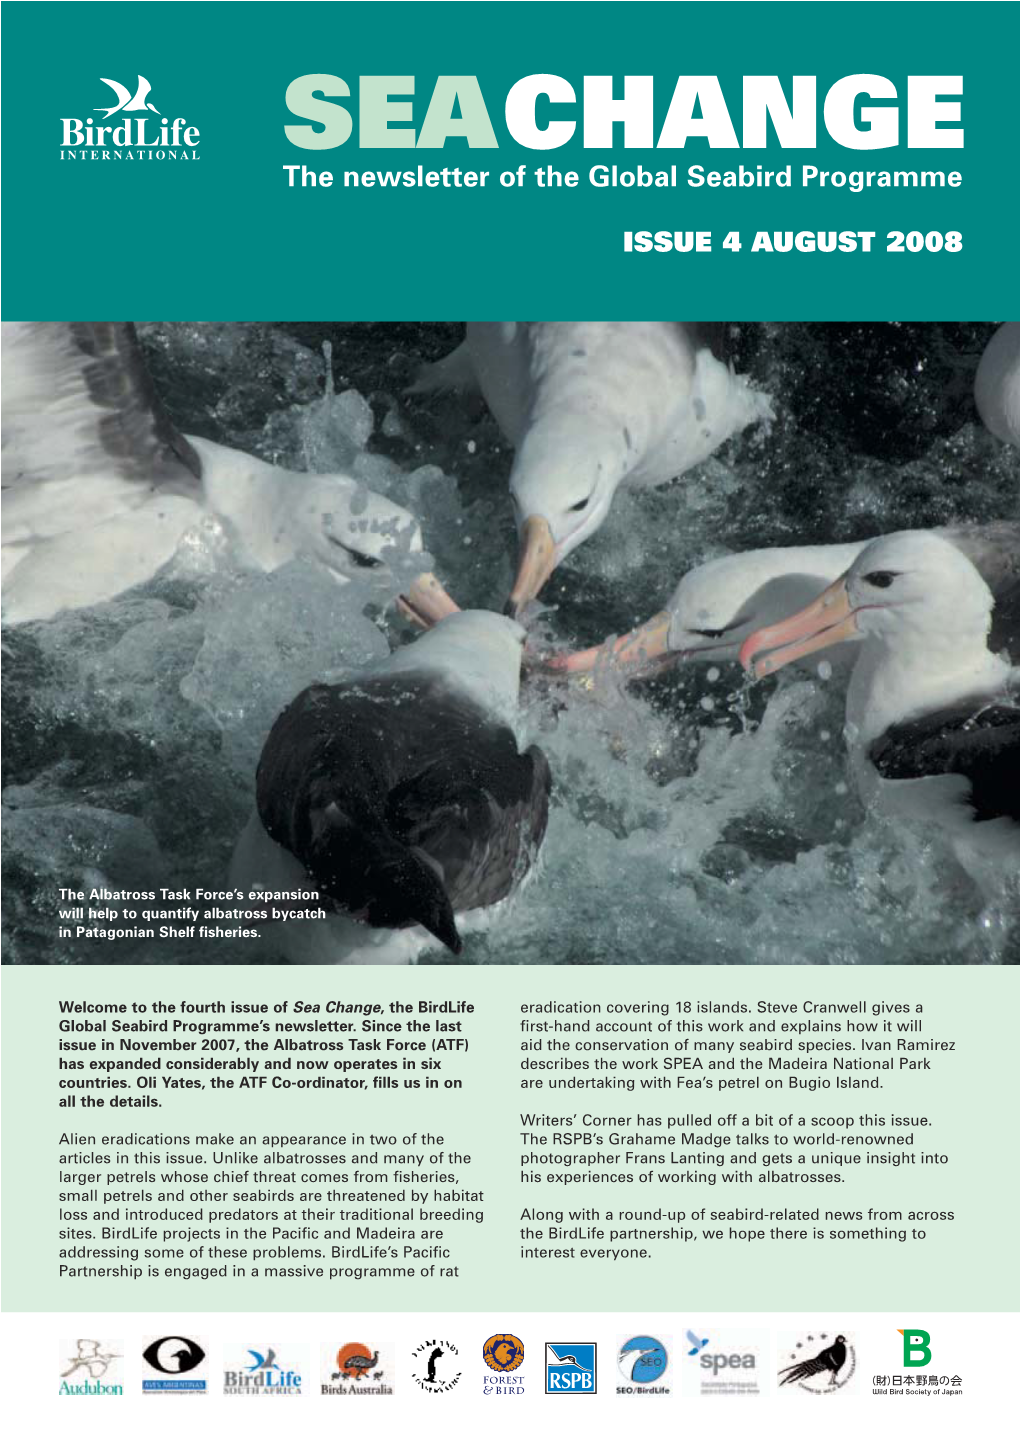 SEACHANGE the Newsletter of the Global Seabird Programme